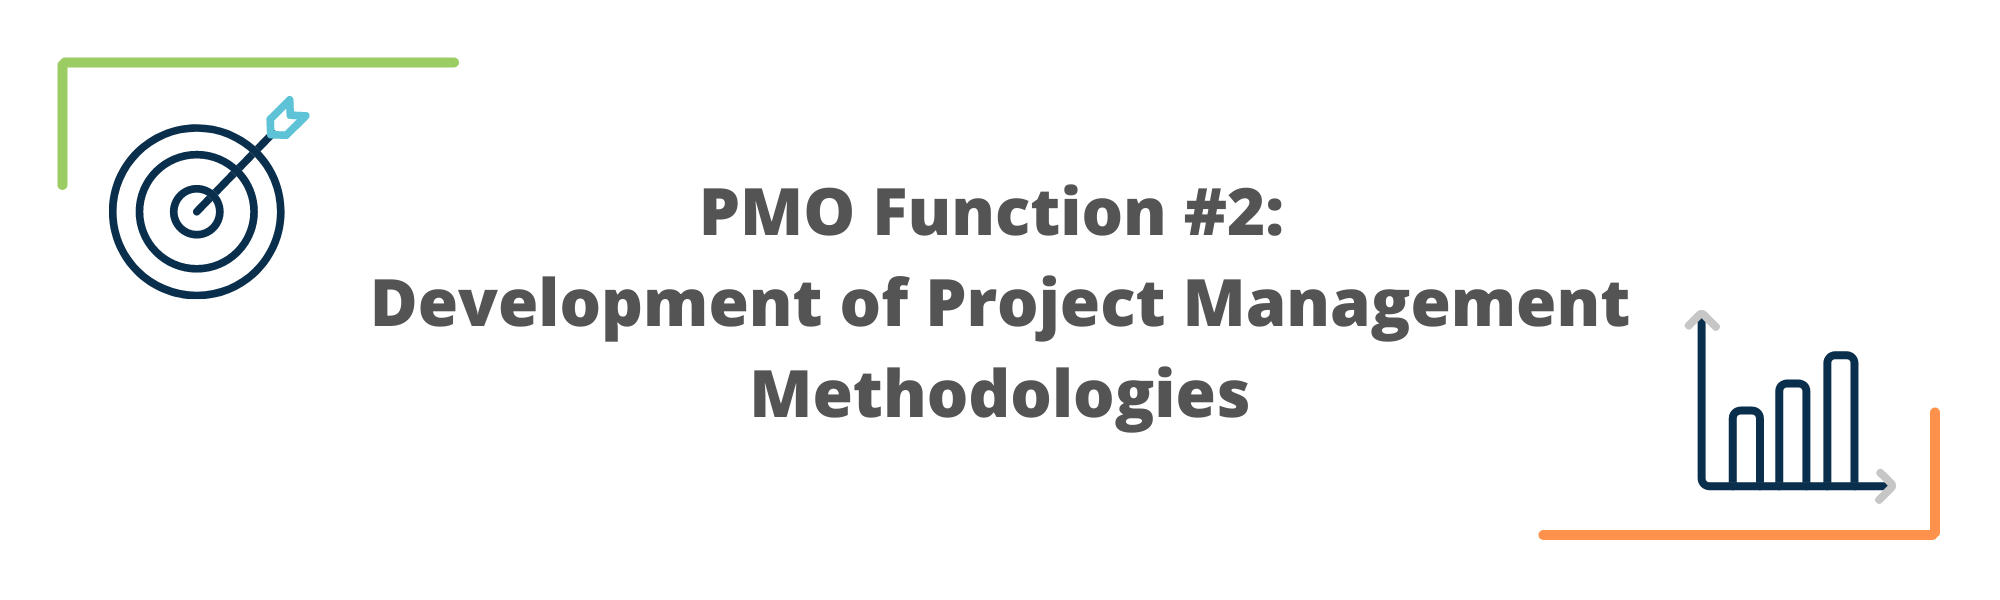 Development of Project Management Methodologies